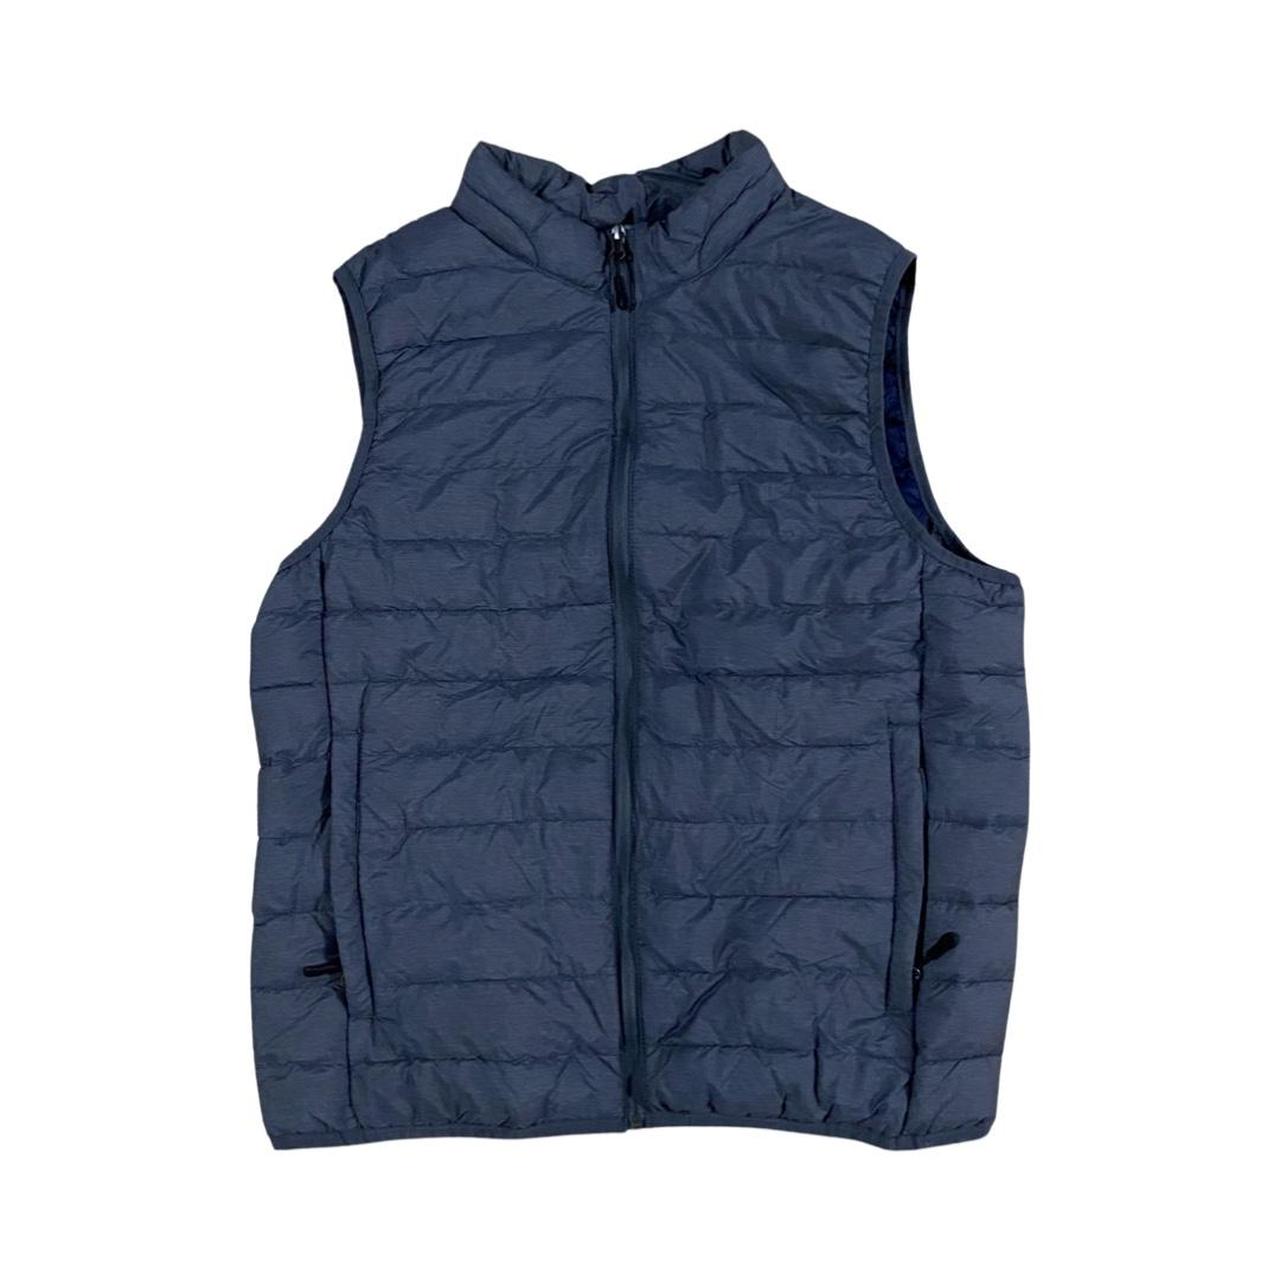 grey puffer vest size small - Depop